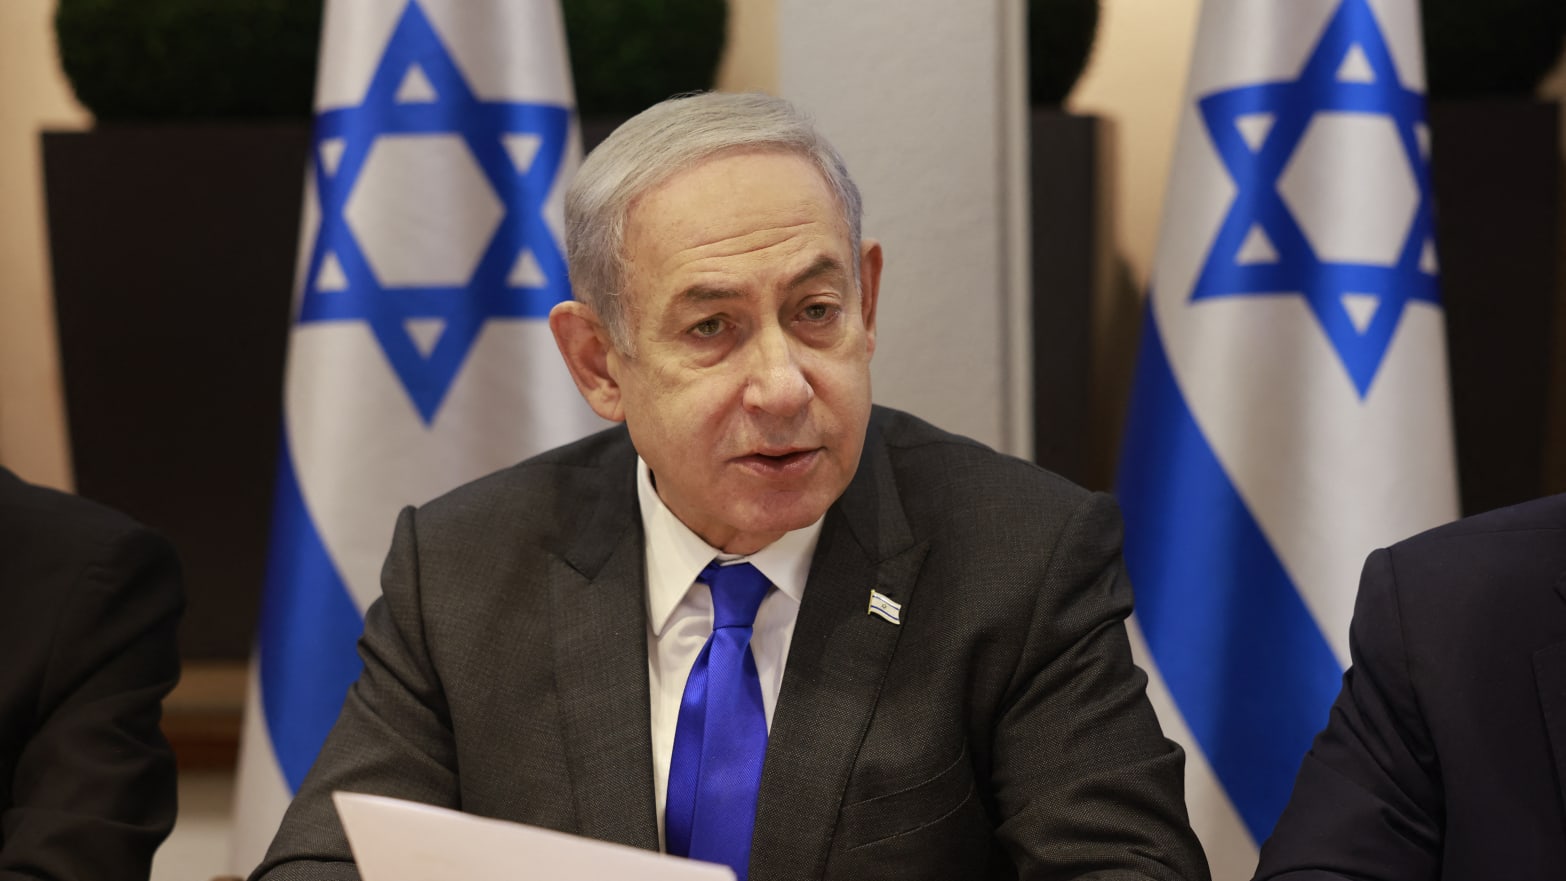 Israeli Prime Minister Benjamin Netanyahu chairs a Cabinet meeting